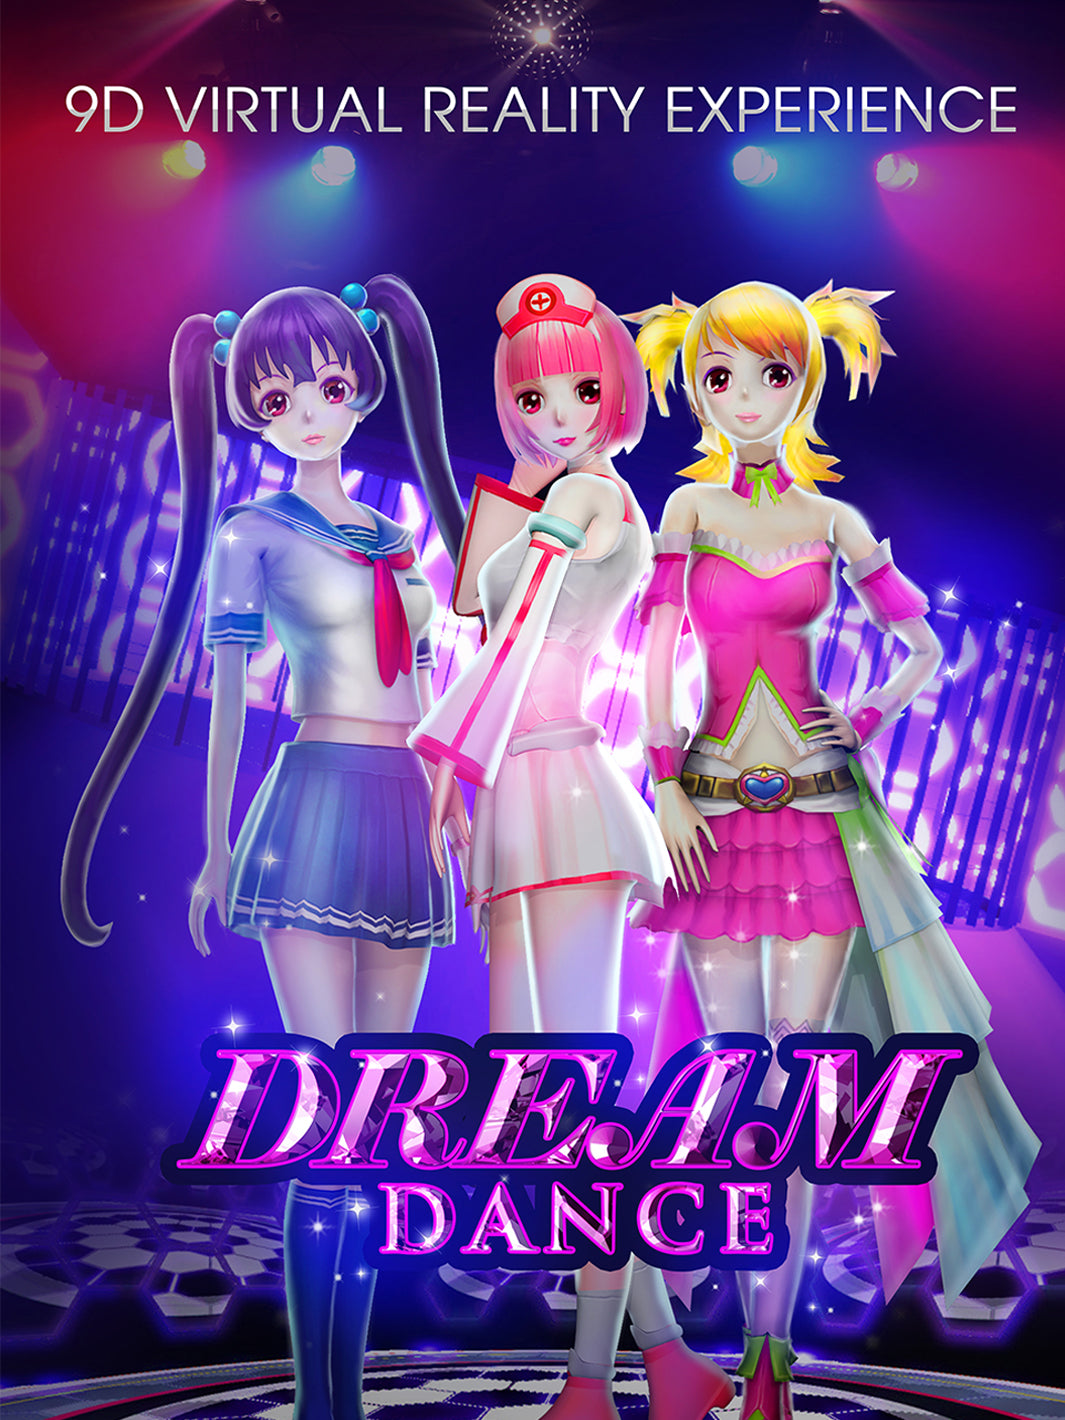 Dance dream - ShallxR VR Games